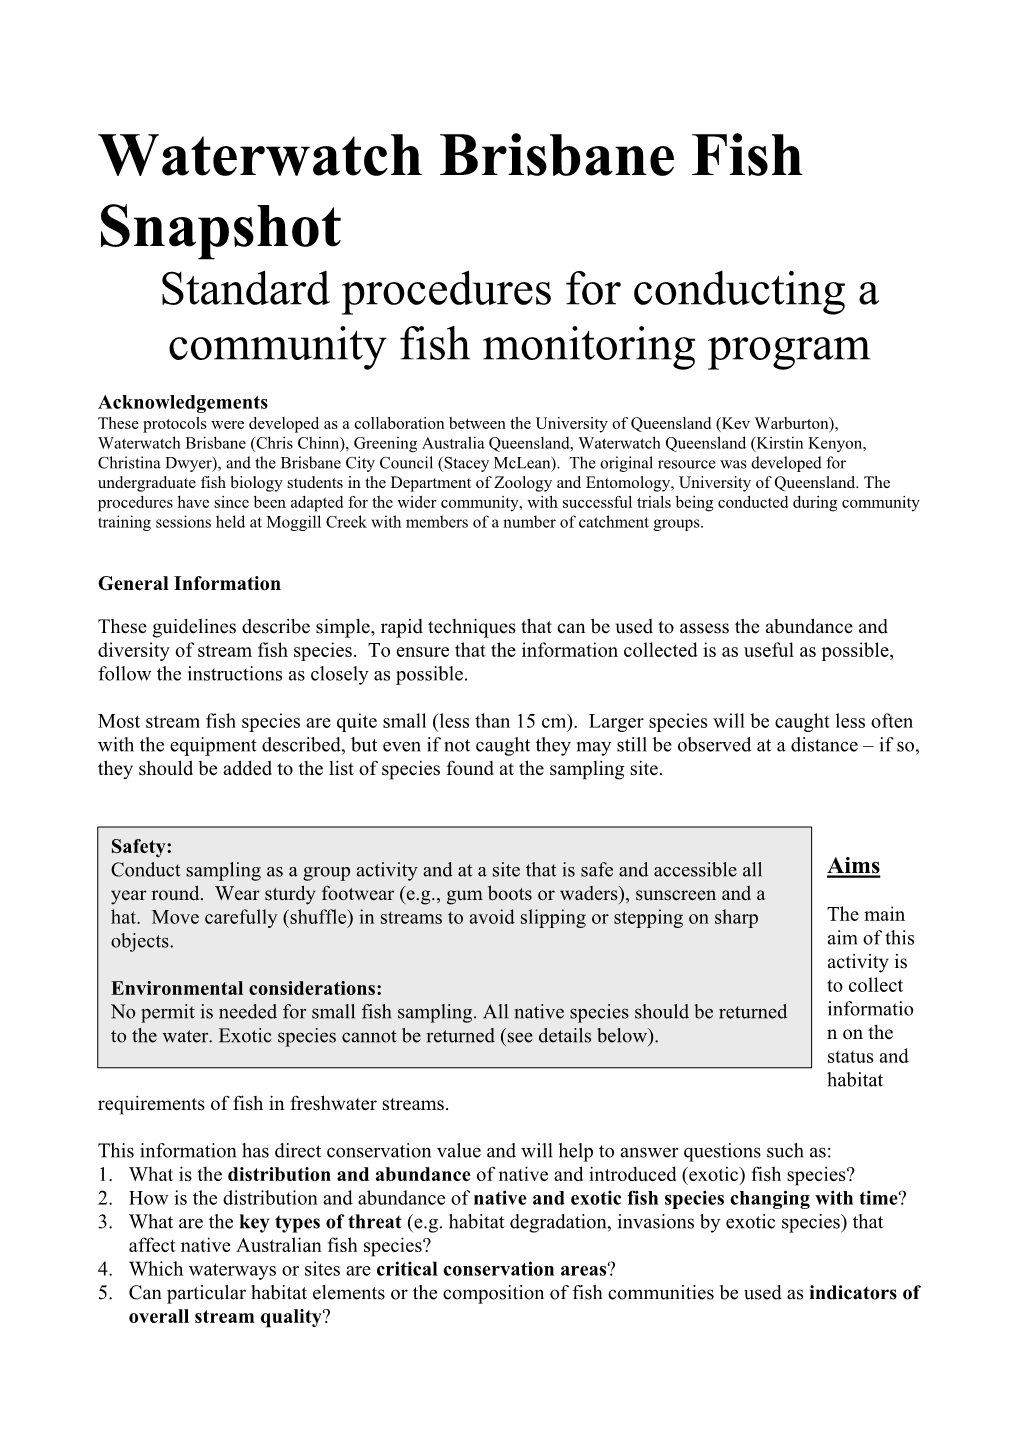 Waterwatch Brisbane Fish Snapshot Standard Procedures for Conducting a Community Fish Monitoring Program